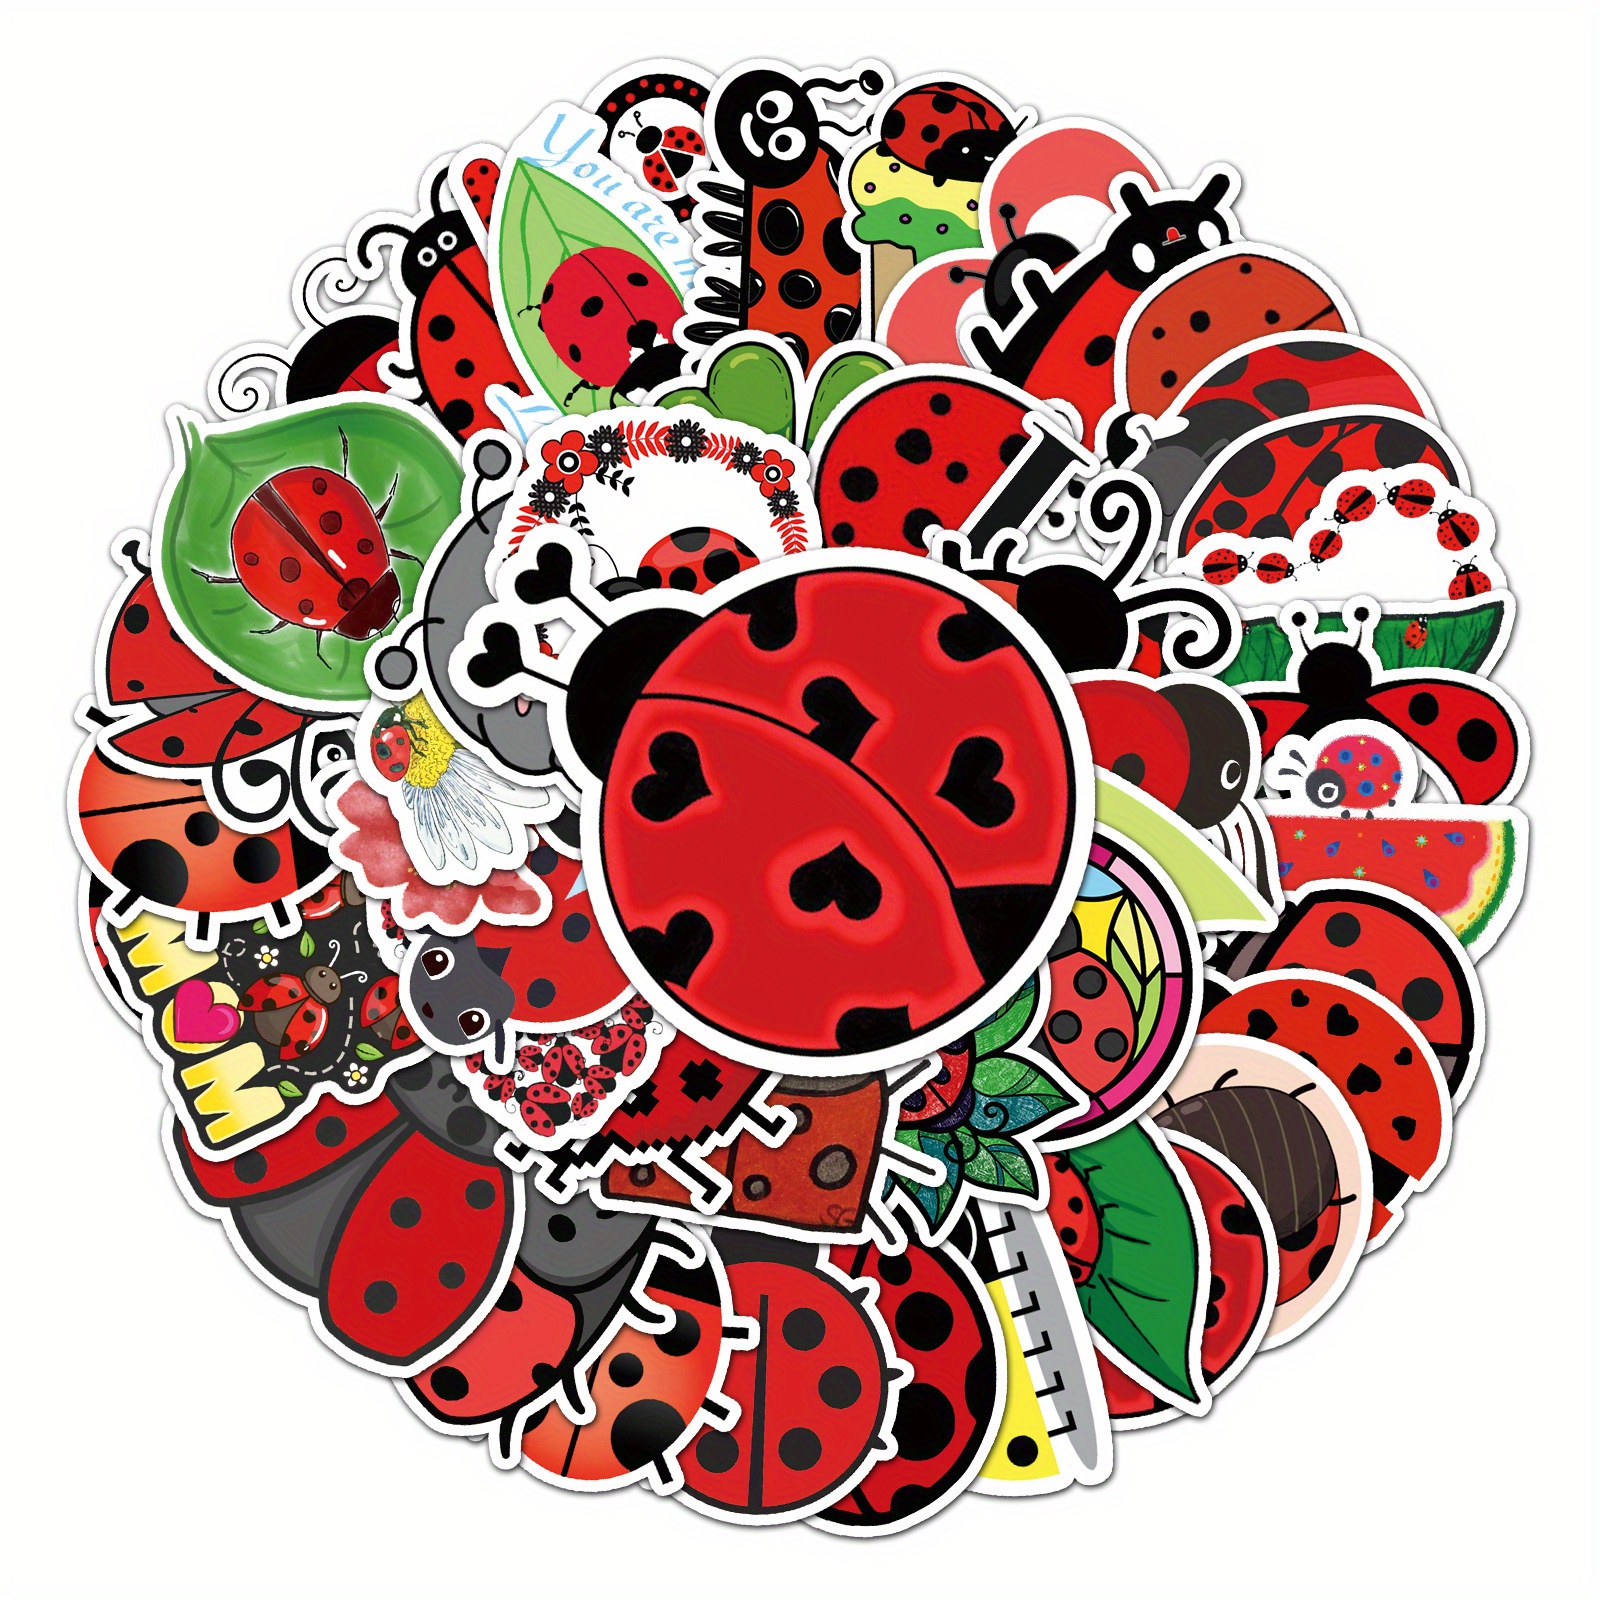 Ladybug Stickers